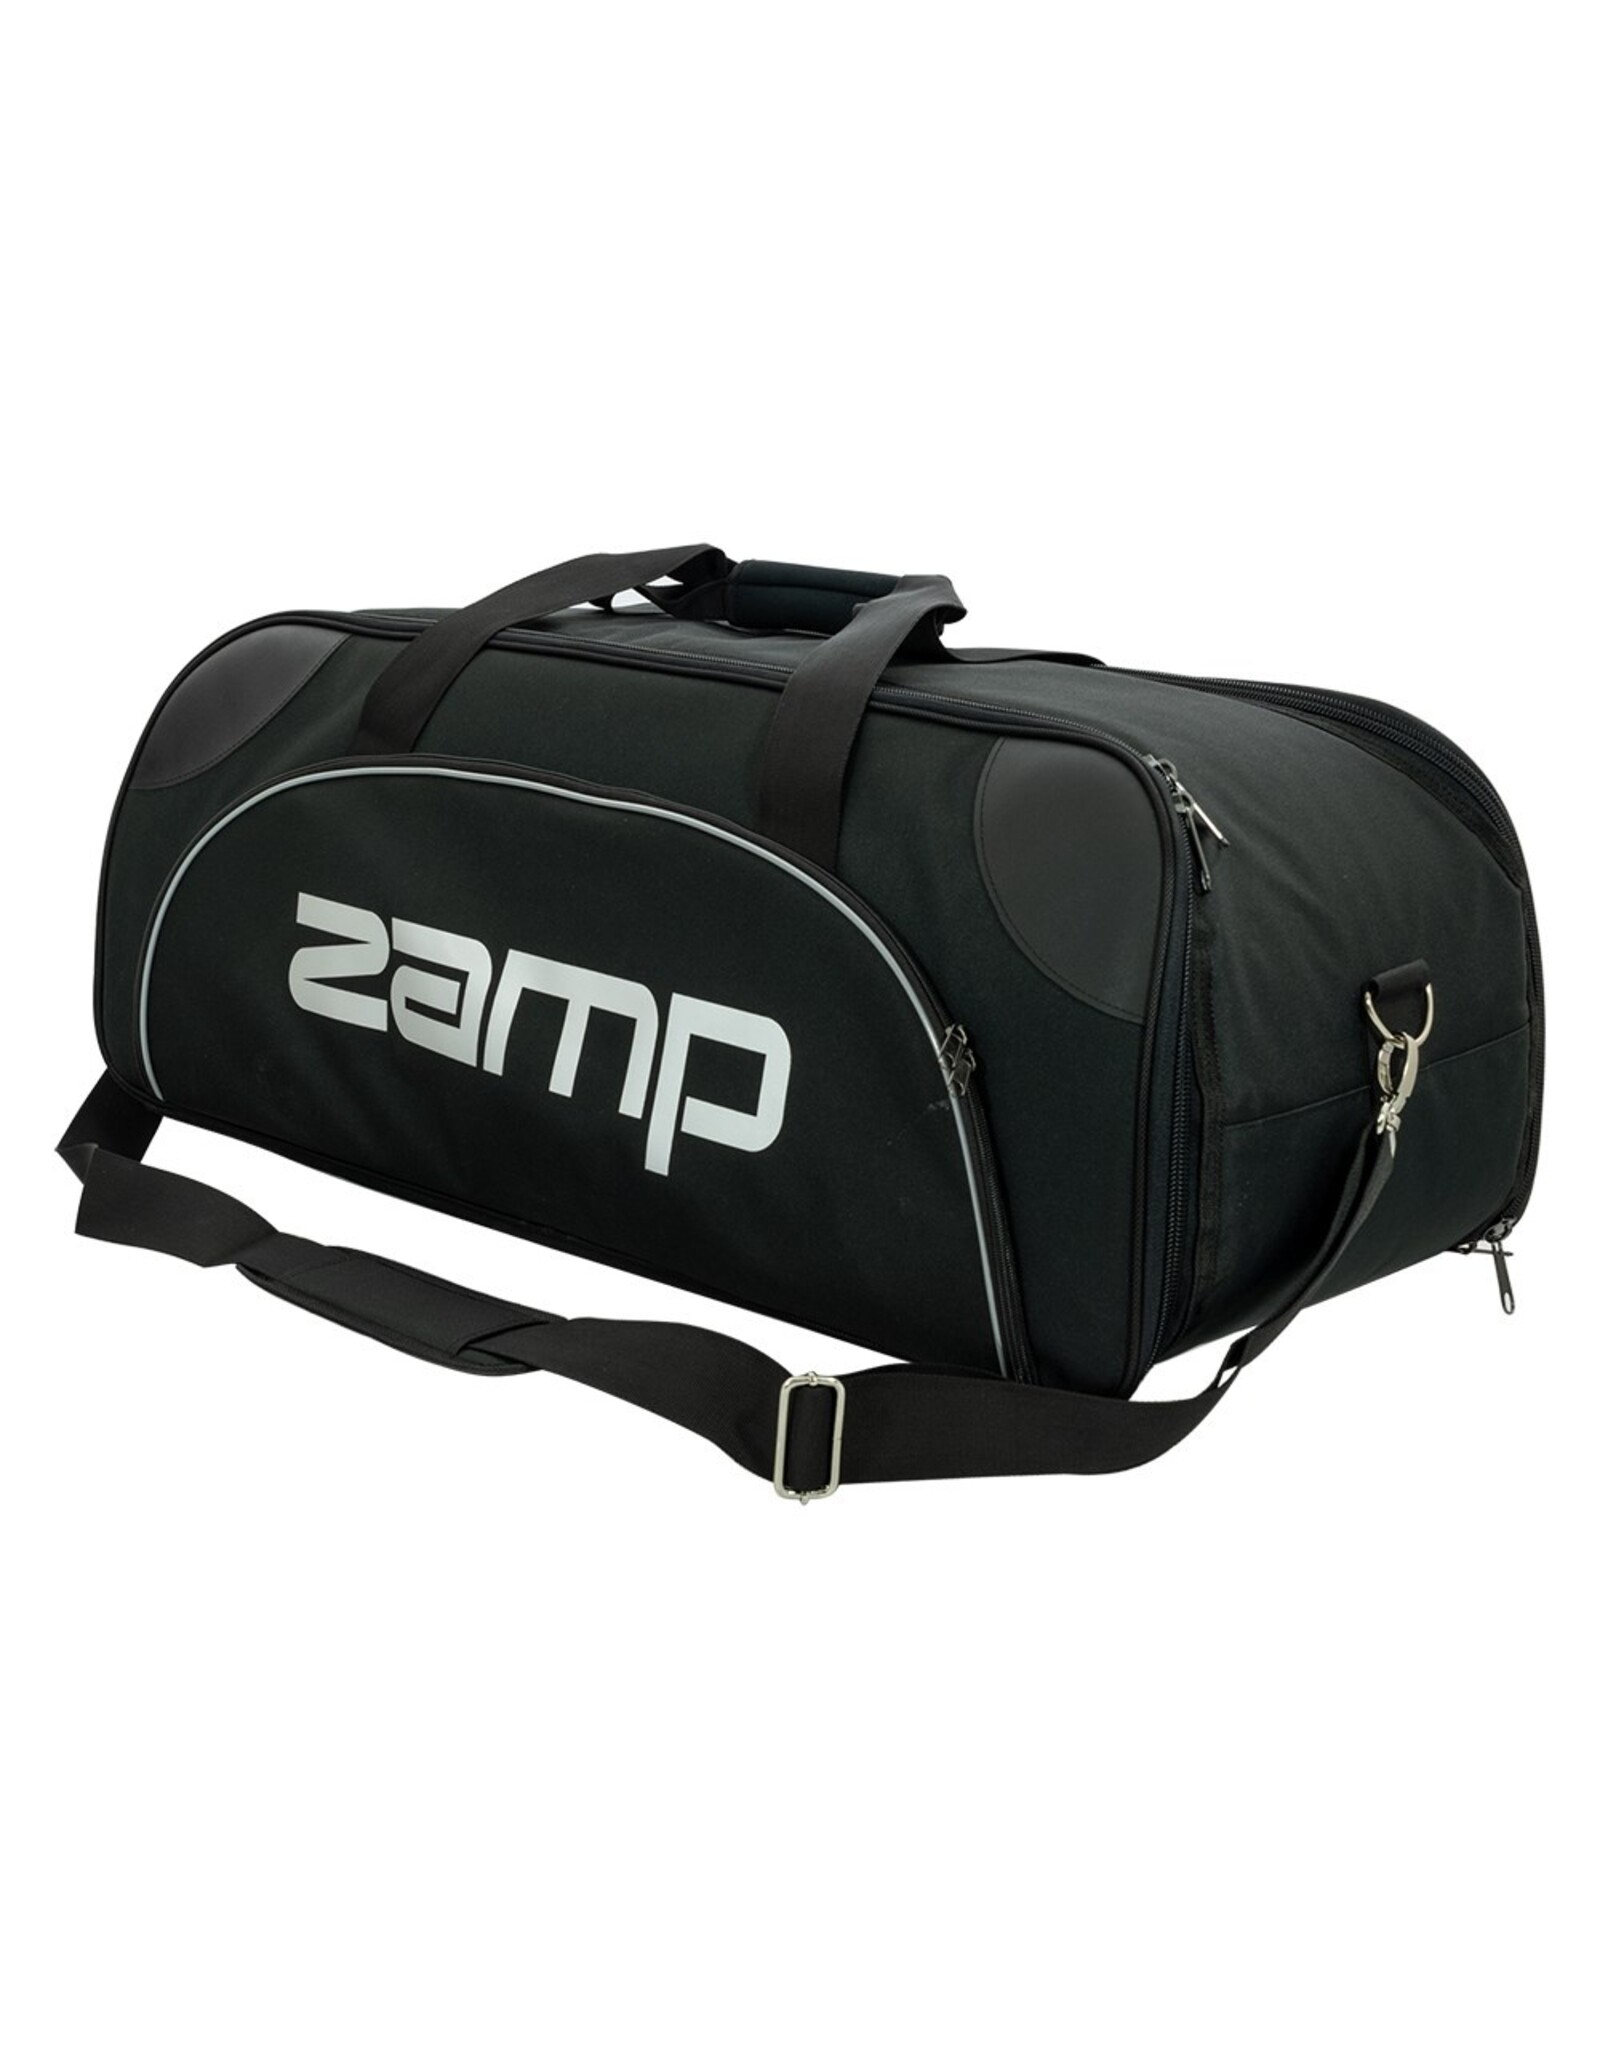 Zamp Zamp Helmet bag black big for 3 helmets